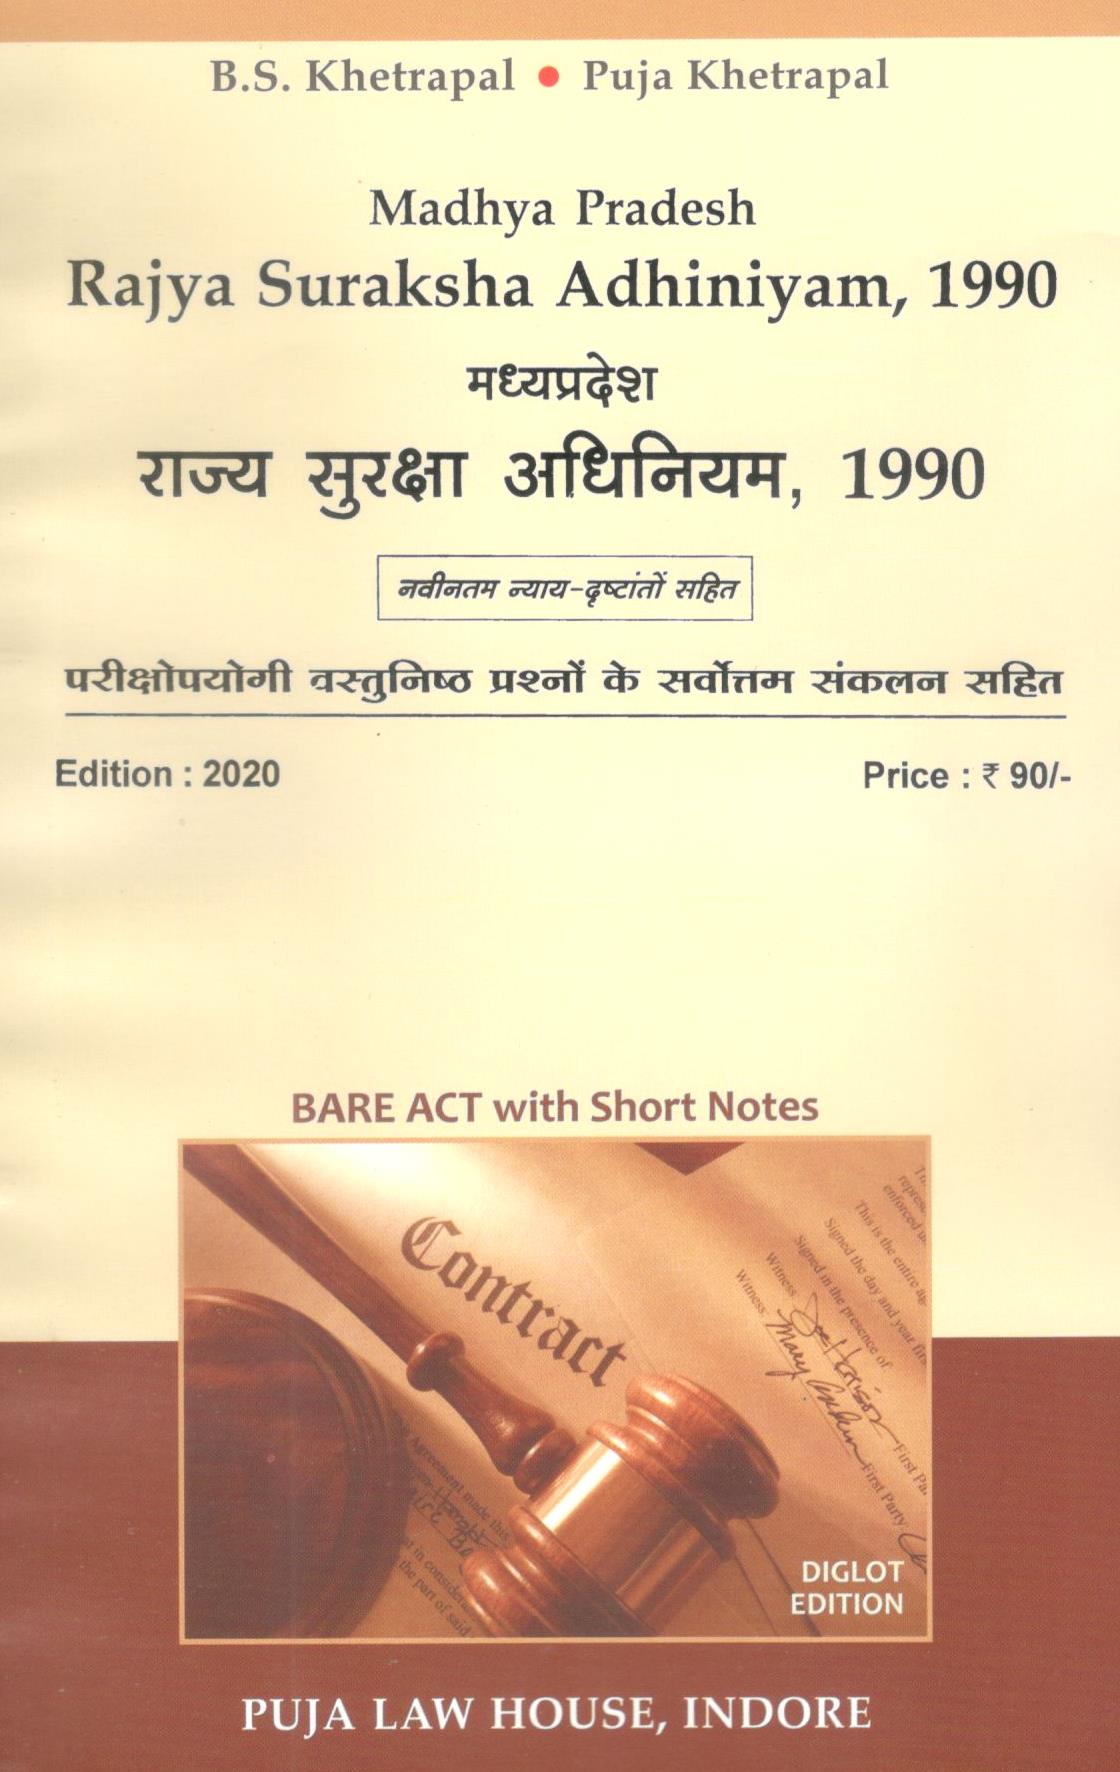  Buy मध्य प्रदेश राज्य सुरक्षा अधिनियम, 1990 / Madhya Pradesh Rajya Suraksha Act, 1990